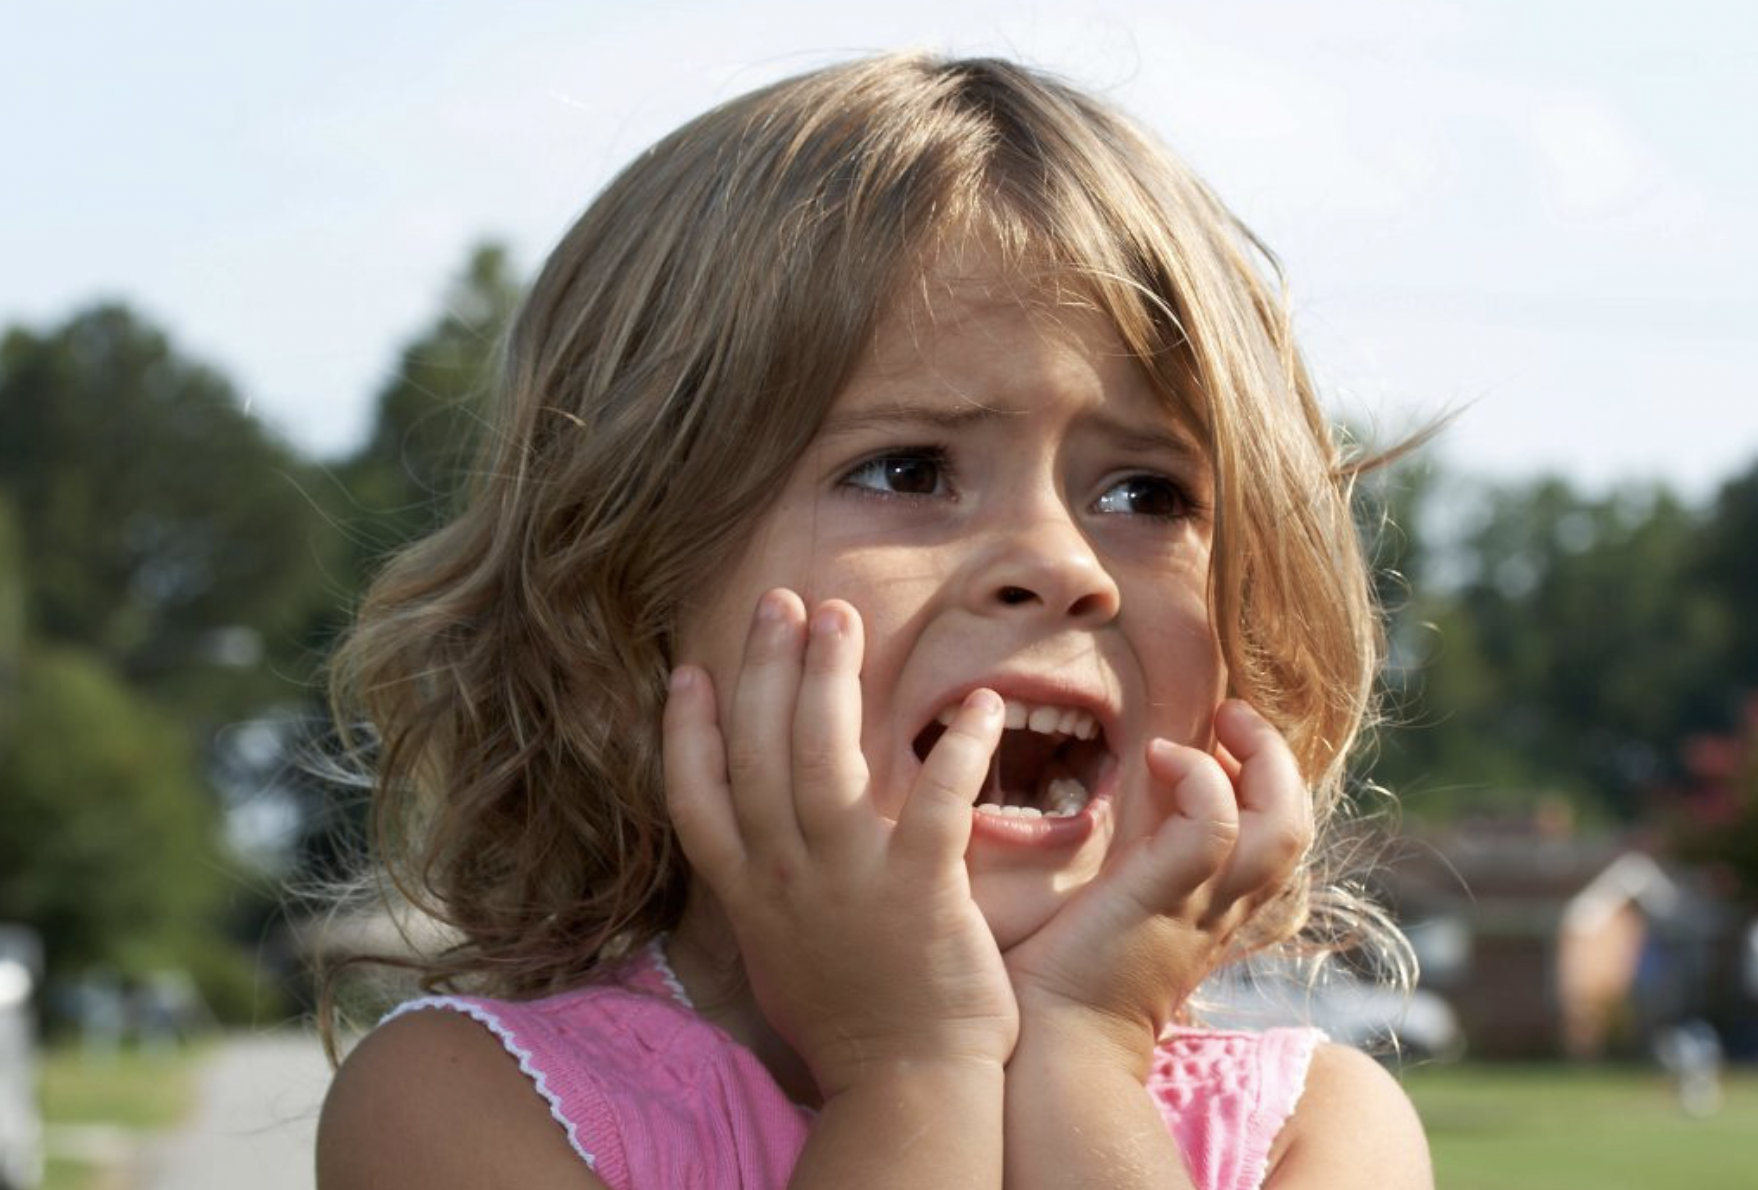 Shocked girl | Source: Shutterstock